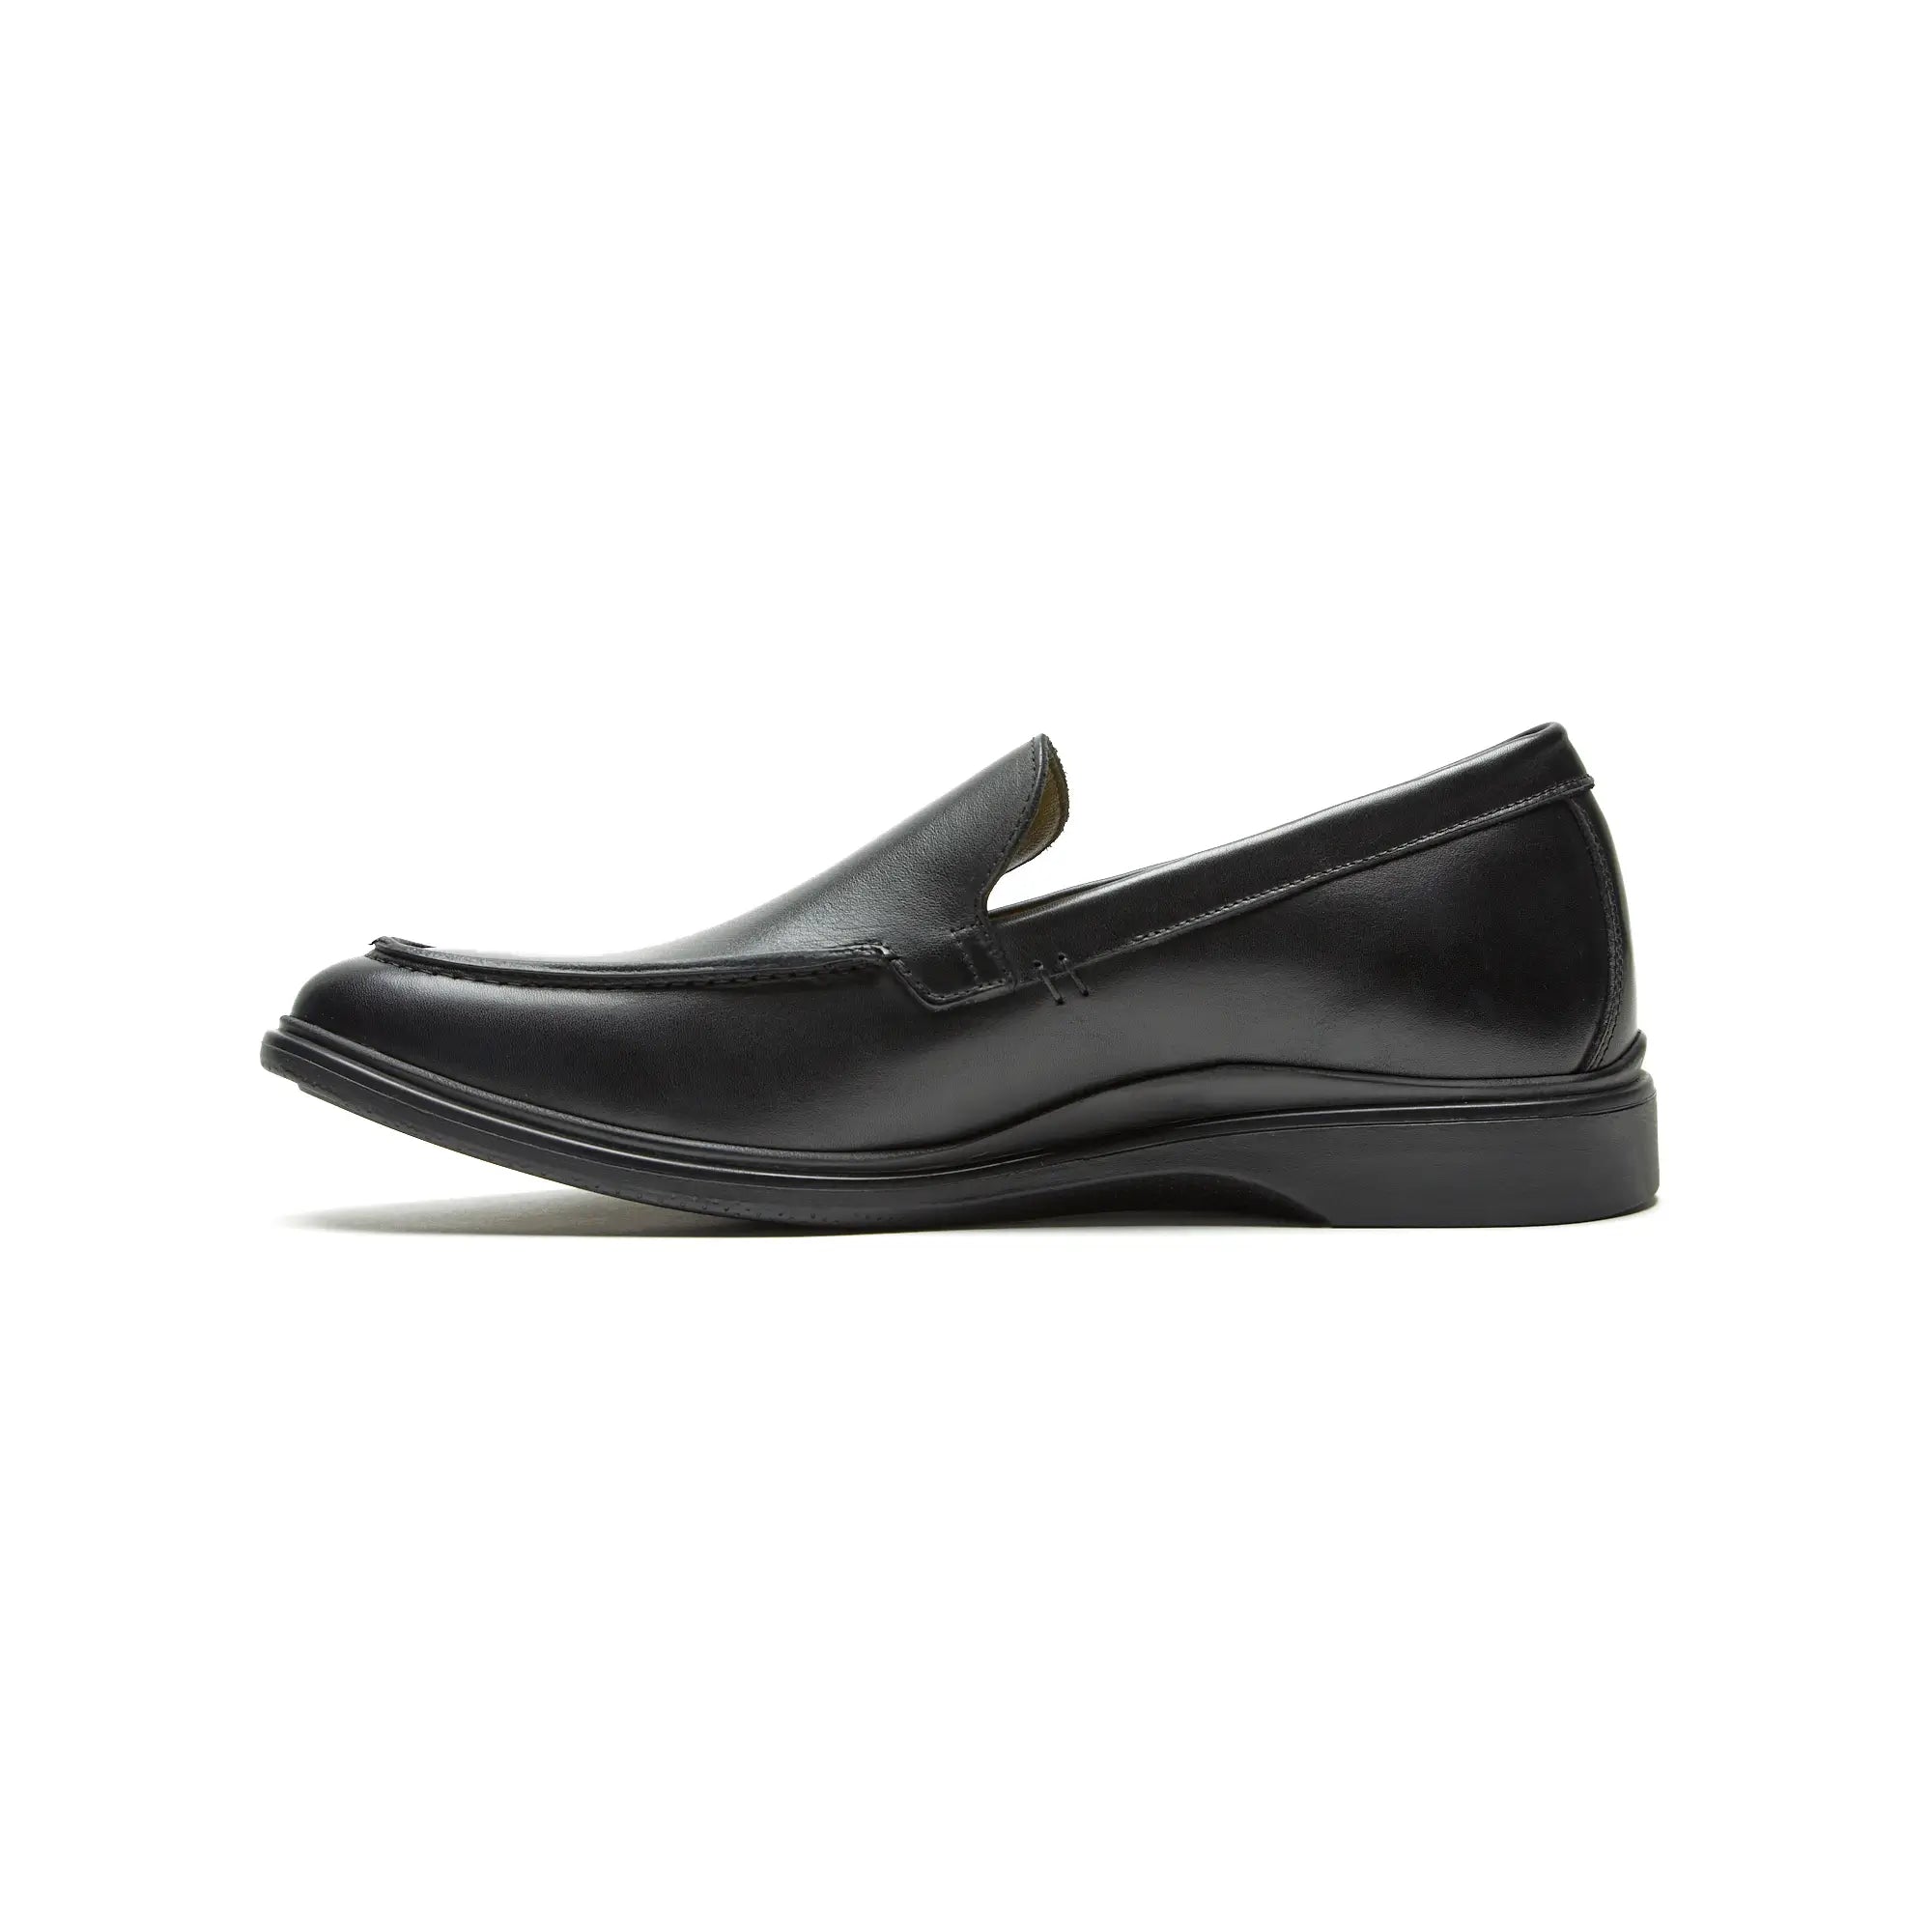 Obsidian loafer dress shoes for men from Amberjack